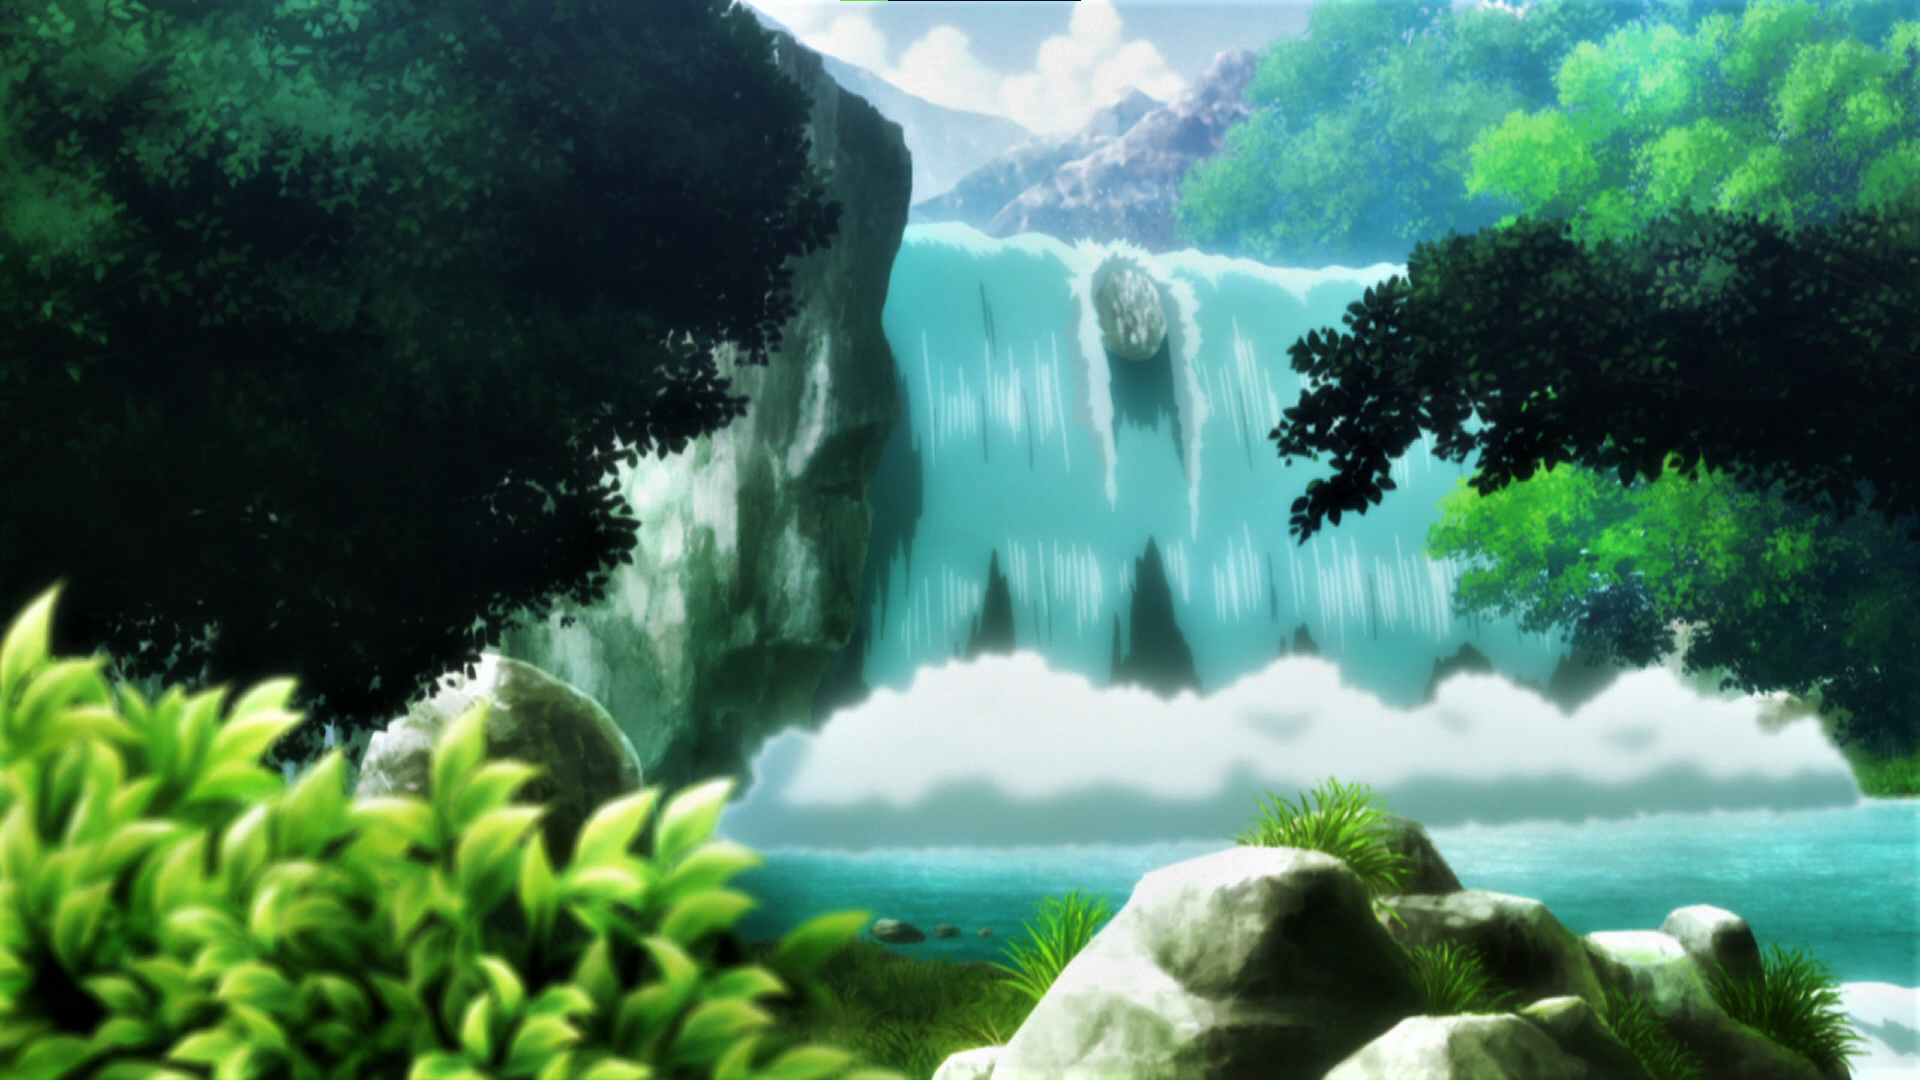 Anime 1920x1080 Hunter x Hunter waterfall trees water rocks clouds anime anime screenshot leaves